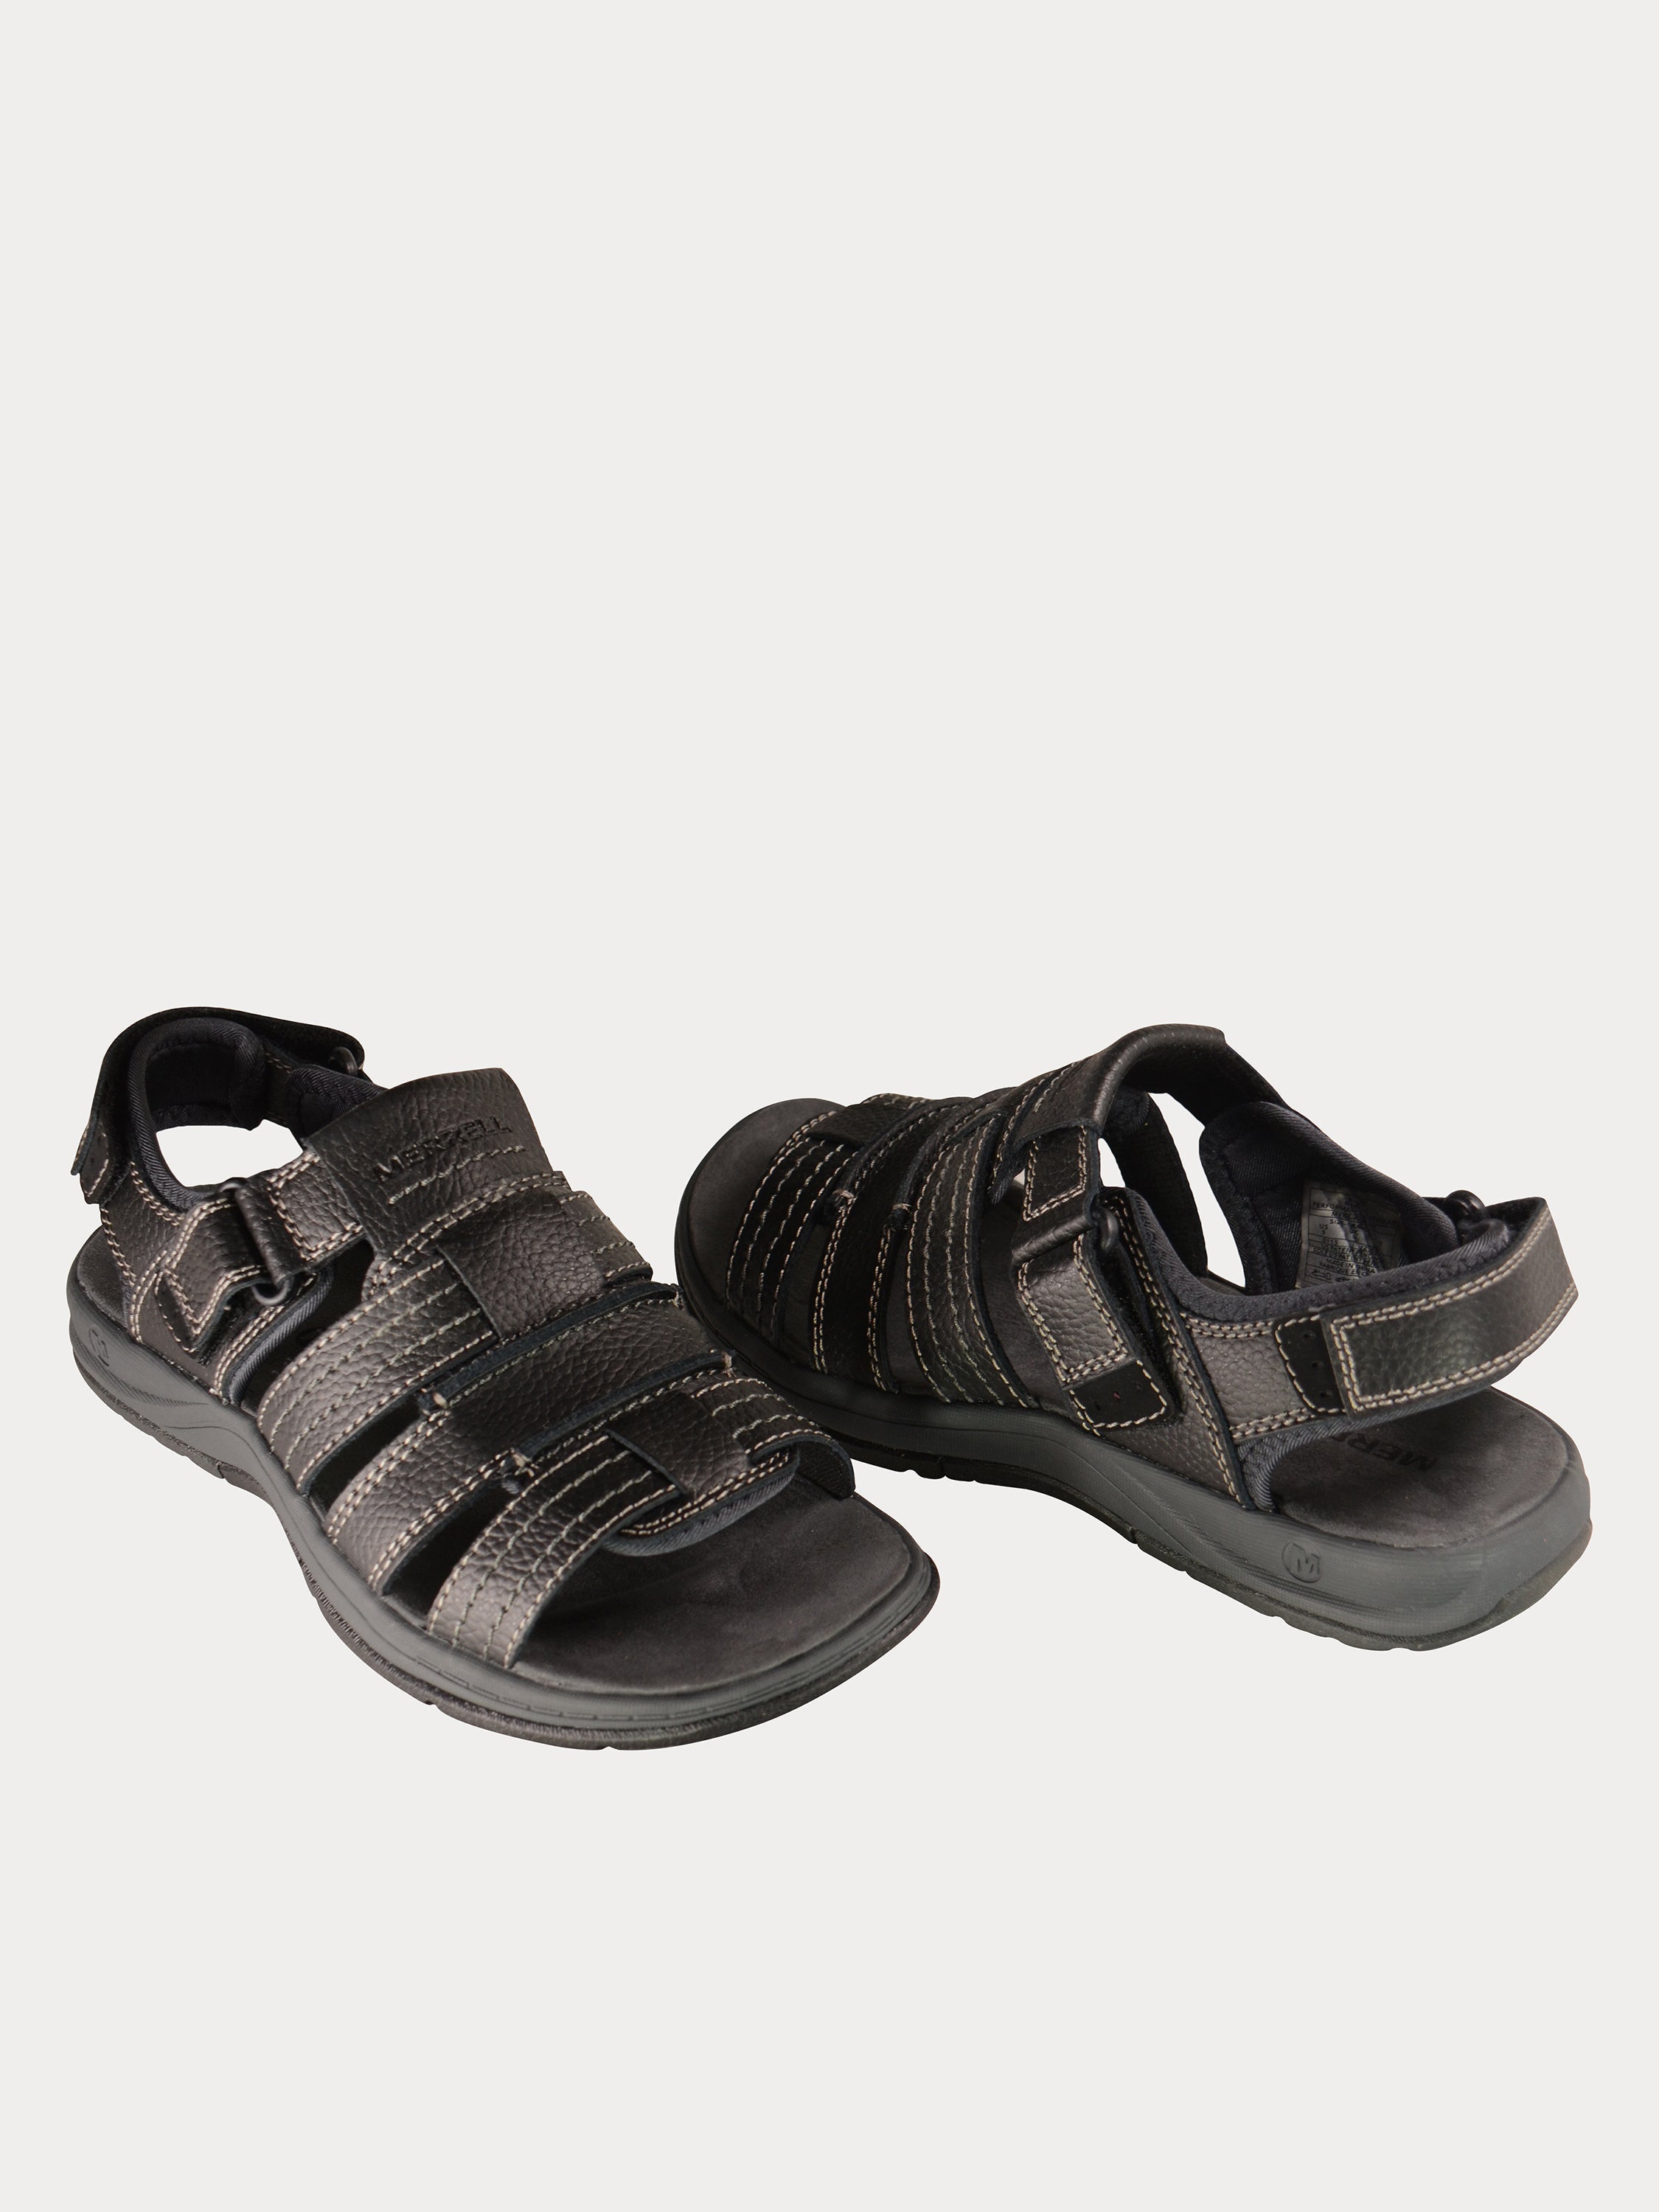 Merrell Men's Outdoor Leather Sandals #color_Black